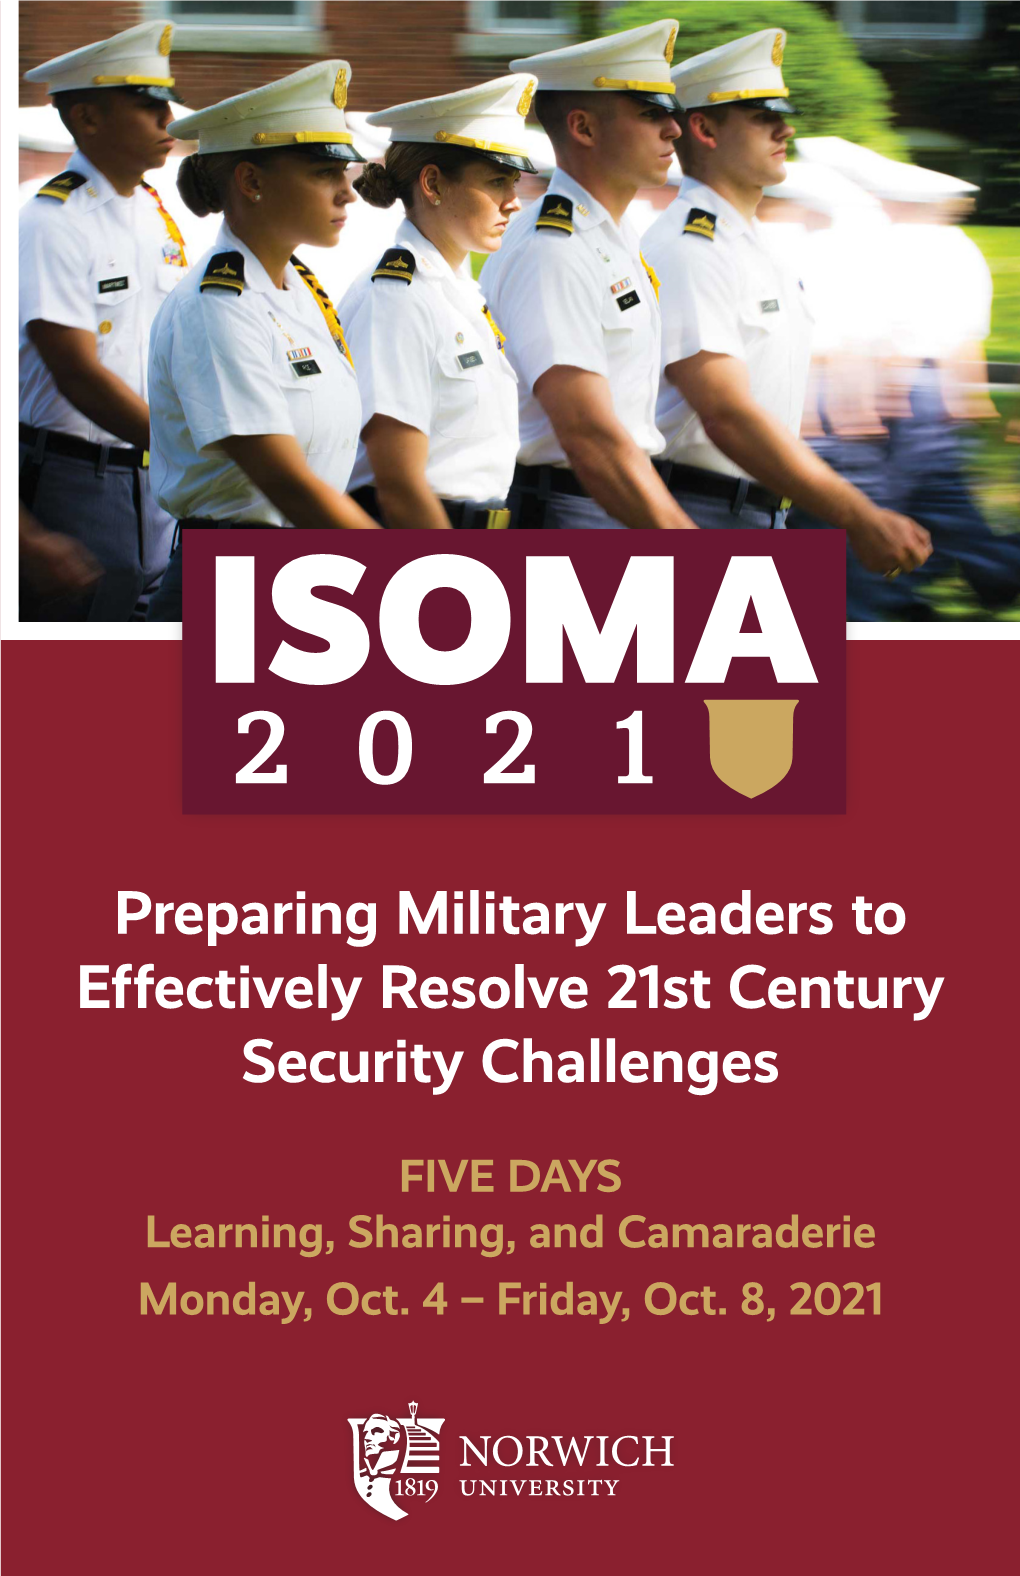 Download ISOMA 2021 Event Brochure (PDF